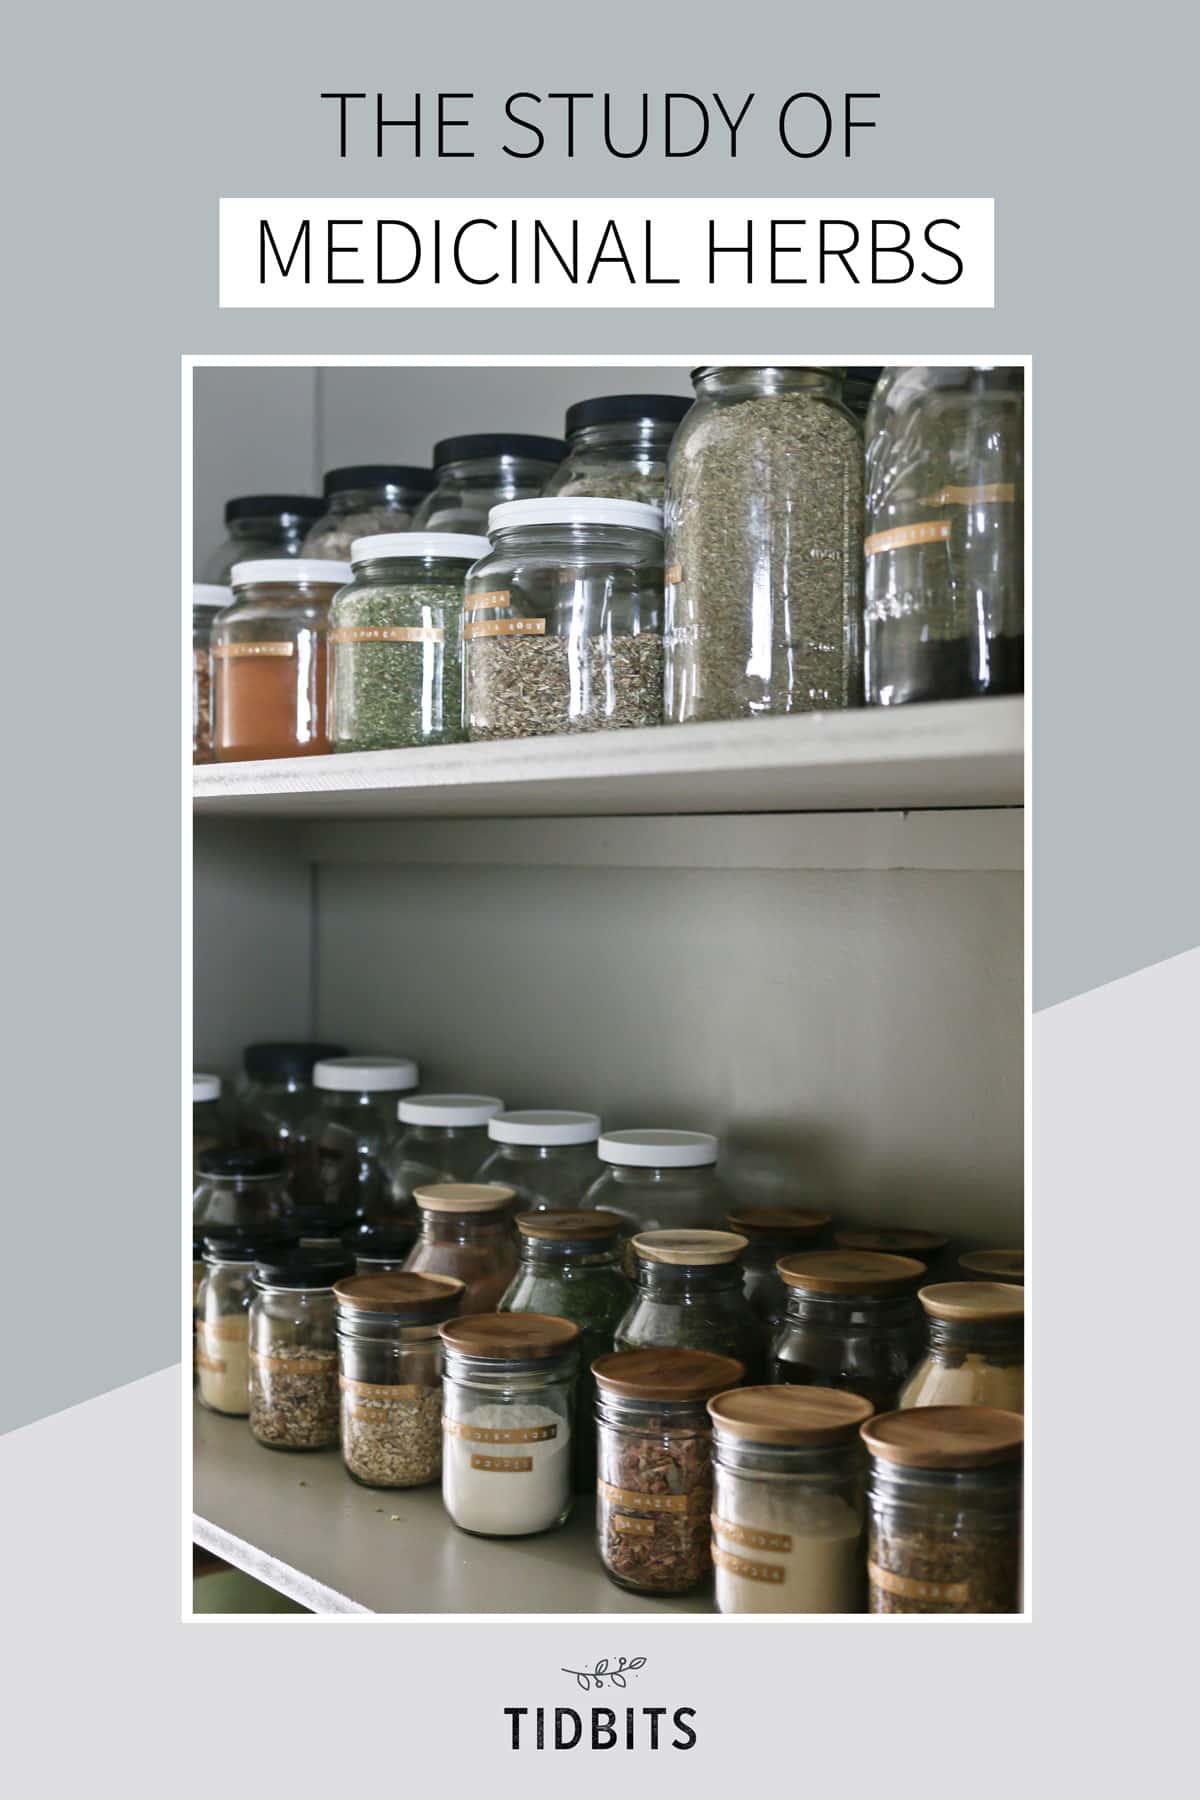 The study of medicinal herbs